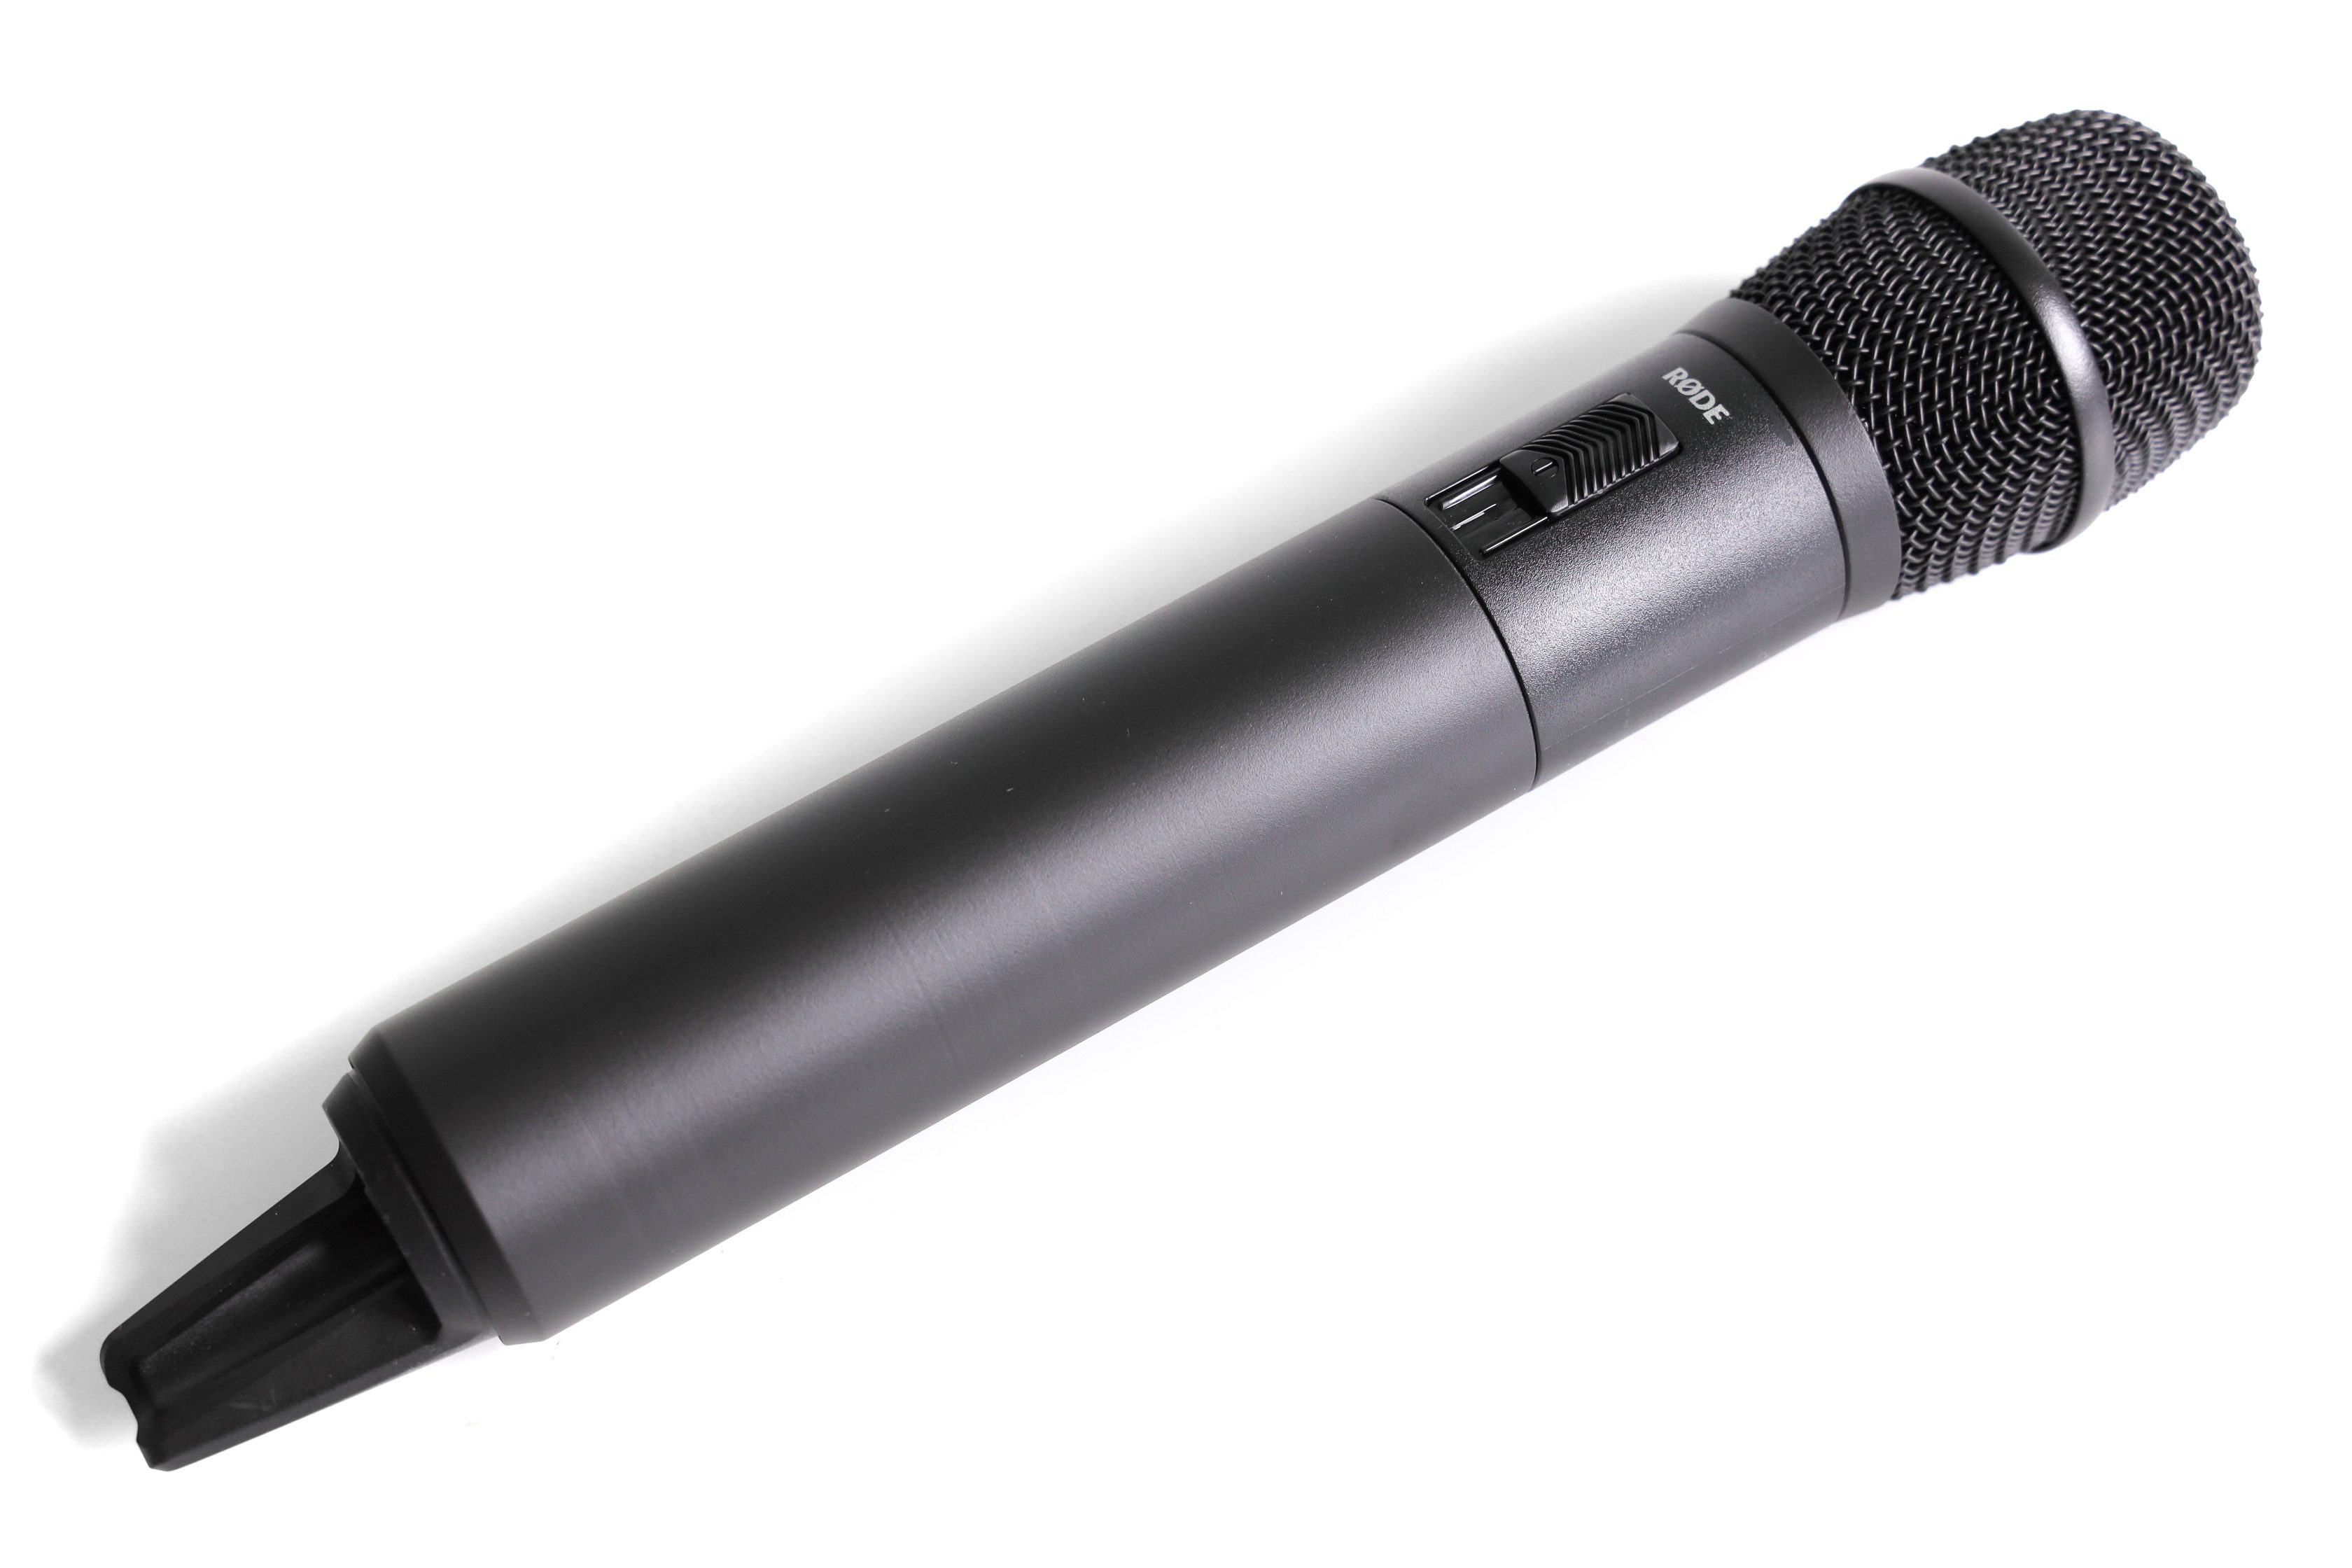 Rode RODELink Performer Kit Système de microphone numérique sans fil